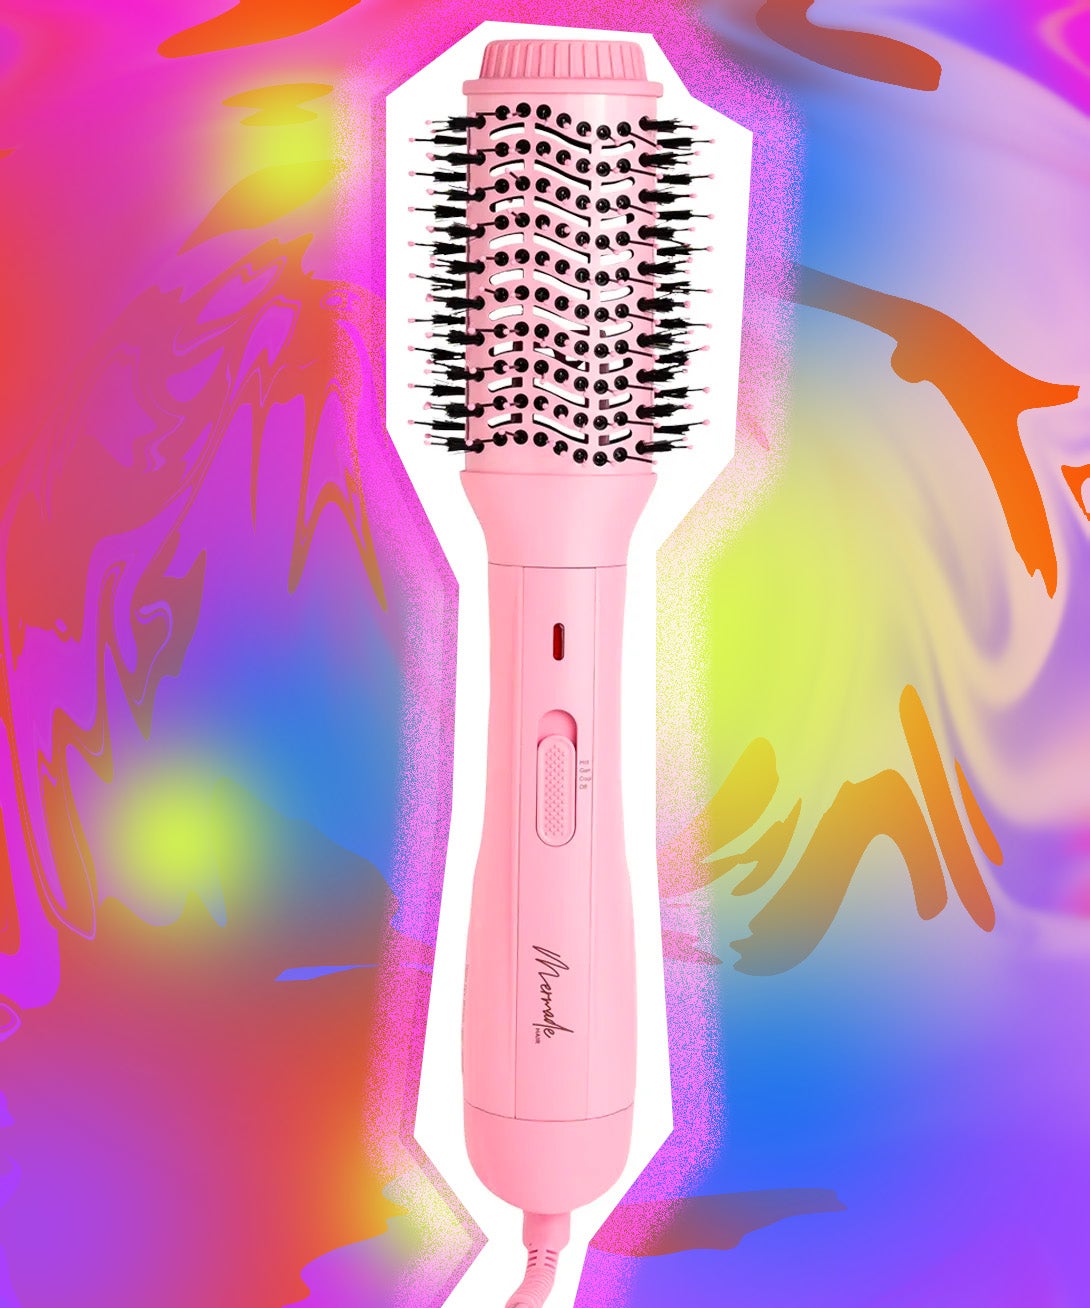 BondiBoost 3 Blowout Brush Pro 3-in-1 Hair Dryer Brush